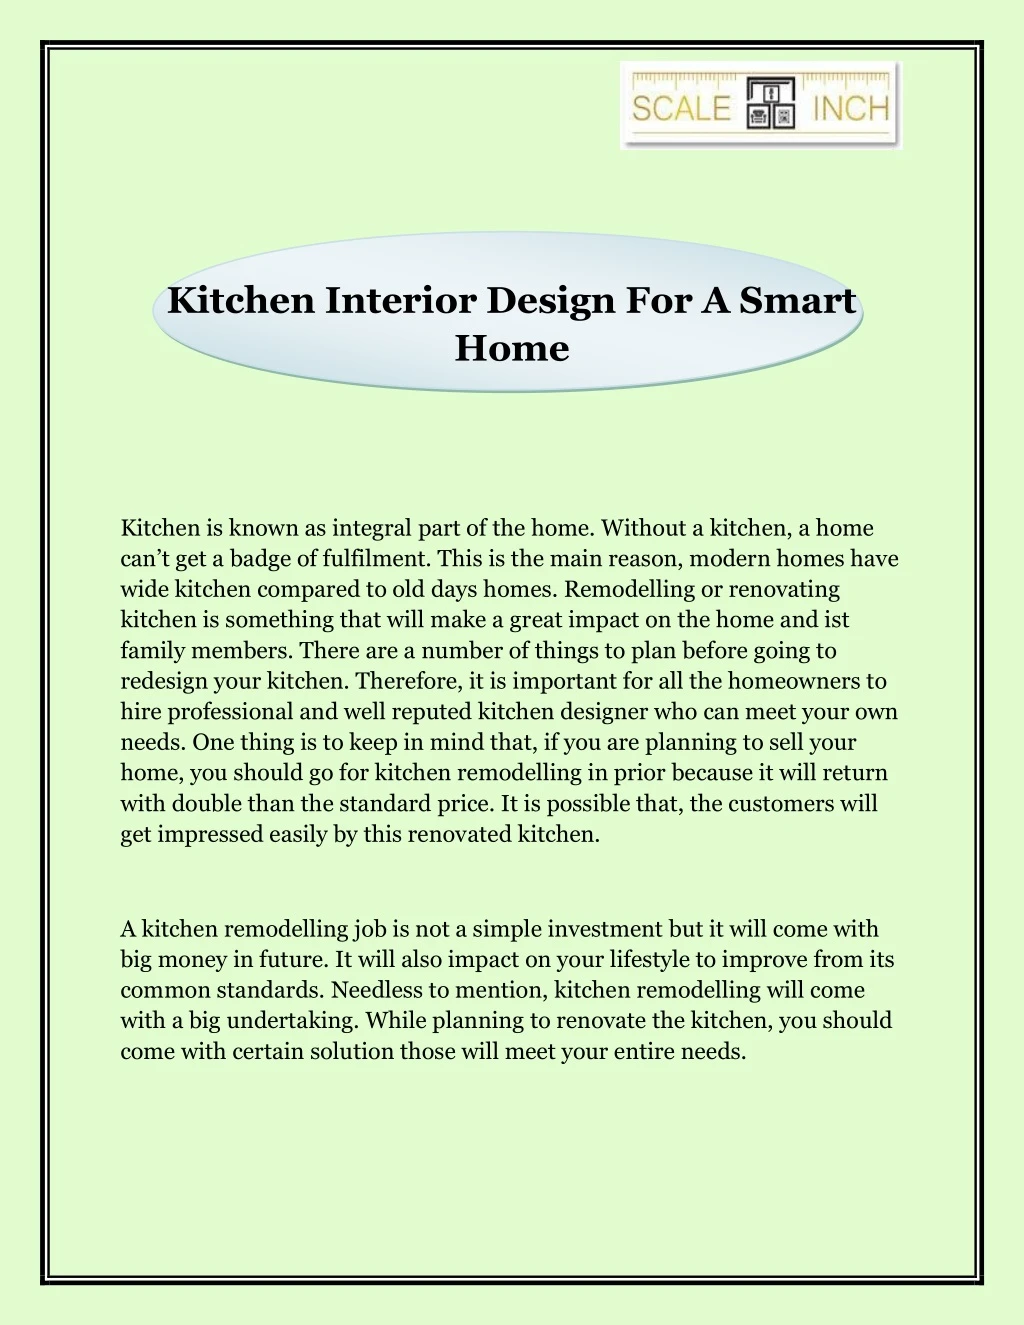 kitchen interior design for a smart home